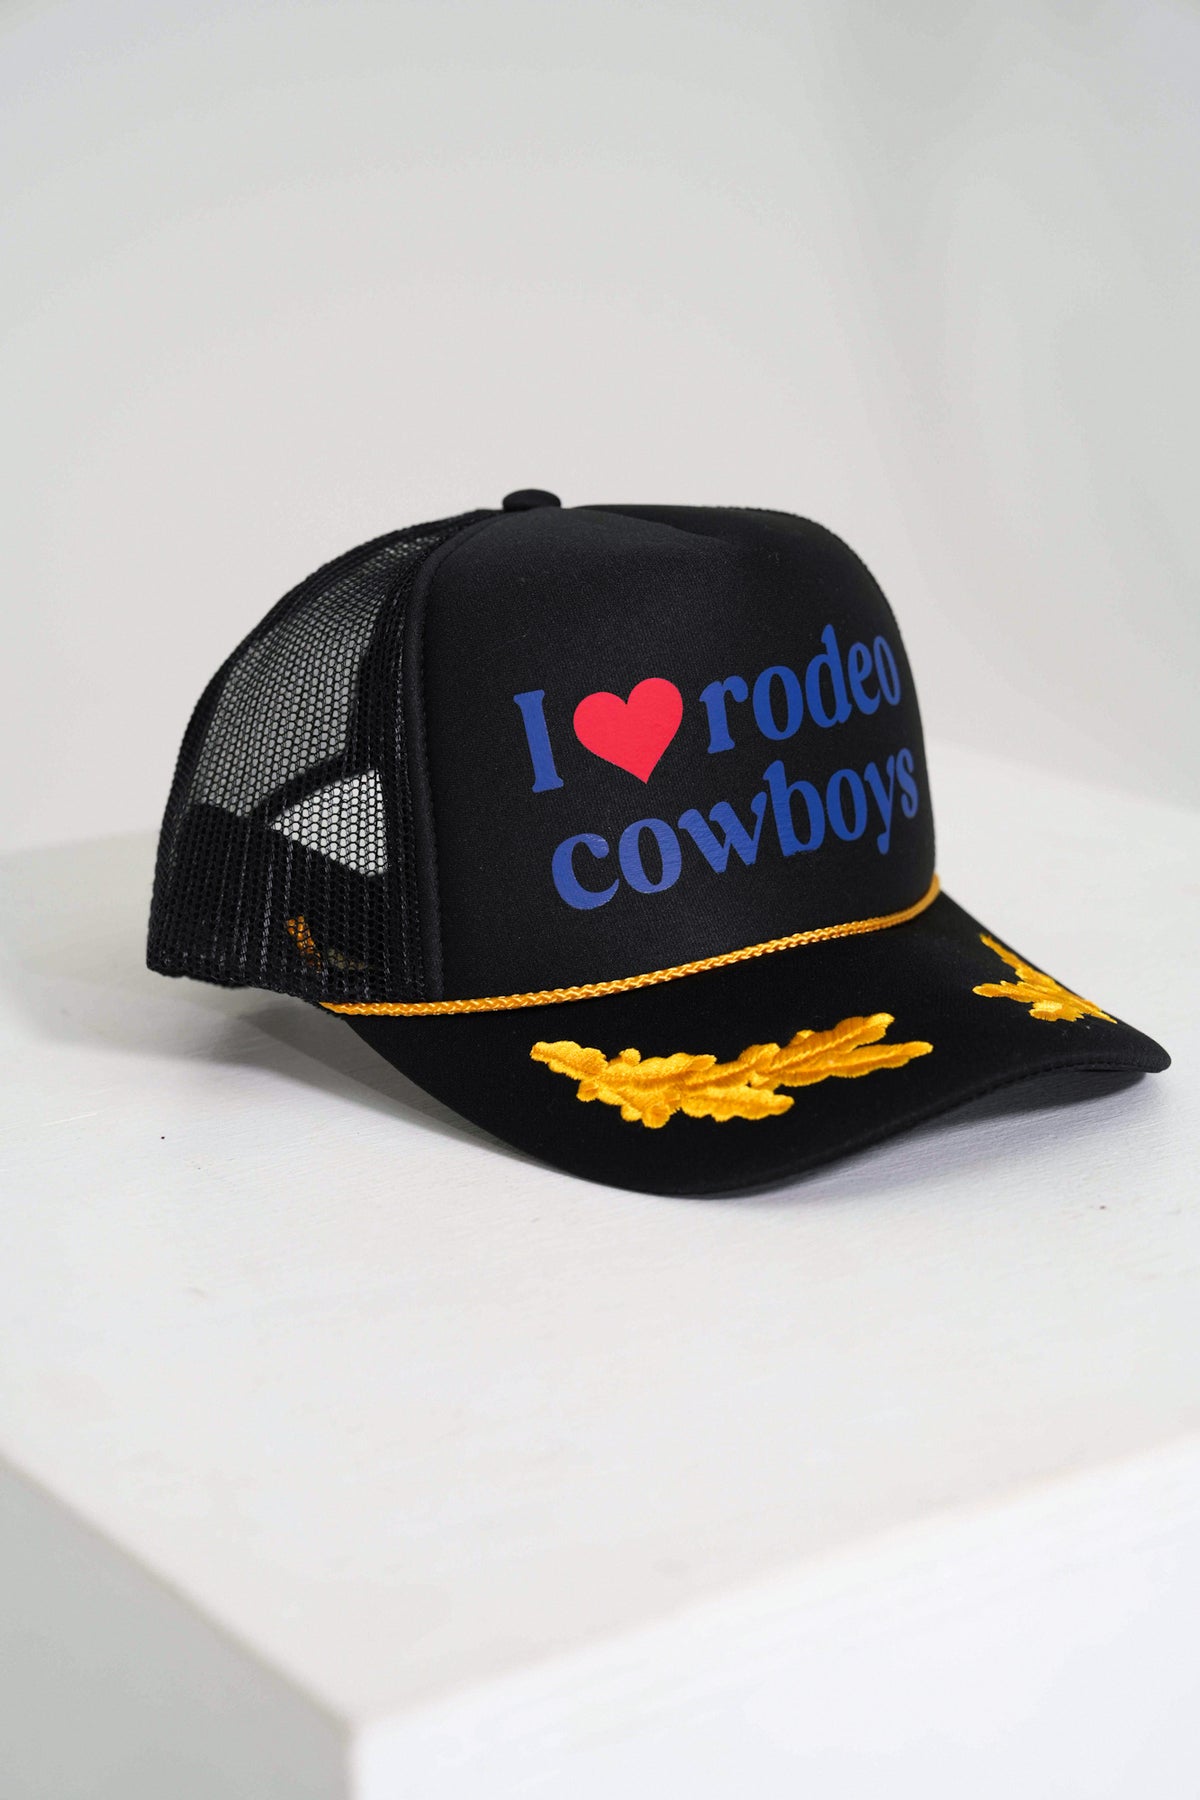 I Love Rodeo Cowboys Trucker Hat